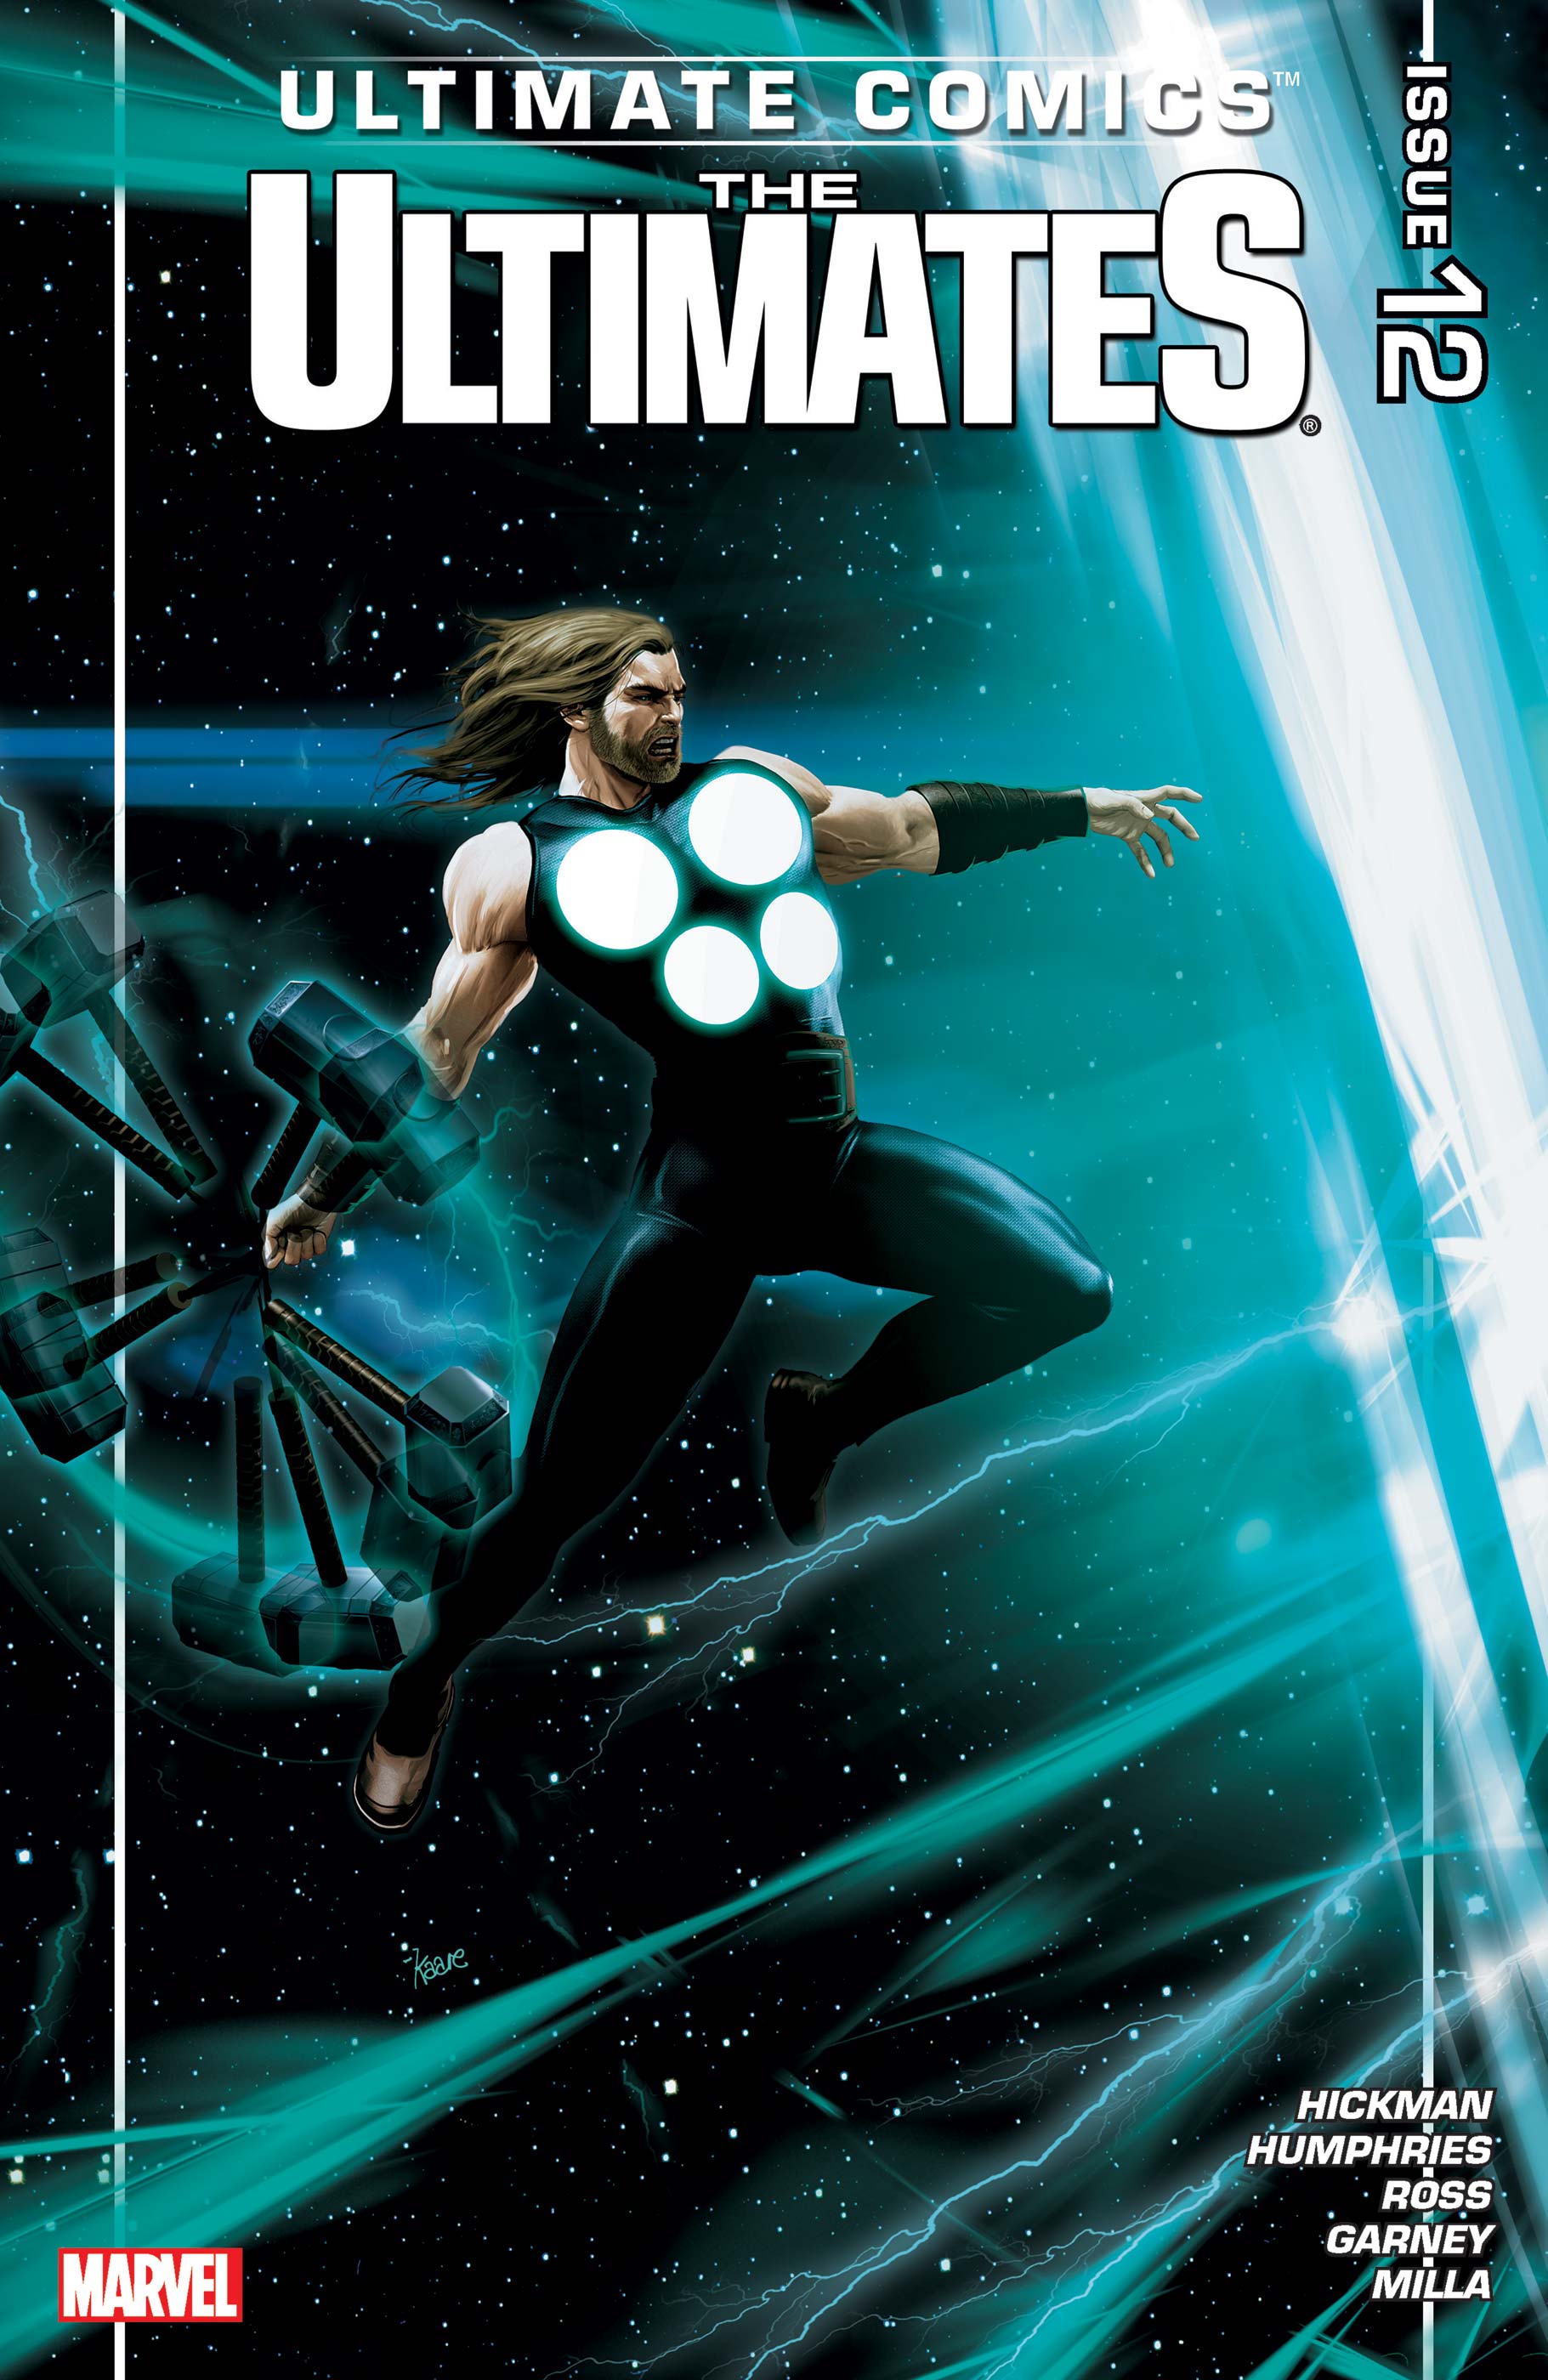 Ultimate Comics Ultimates (2011) #12